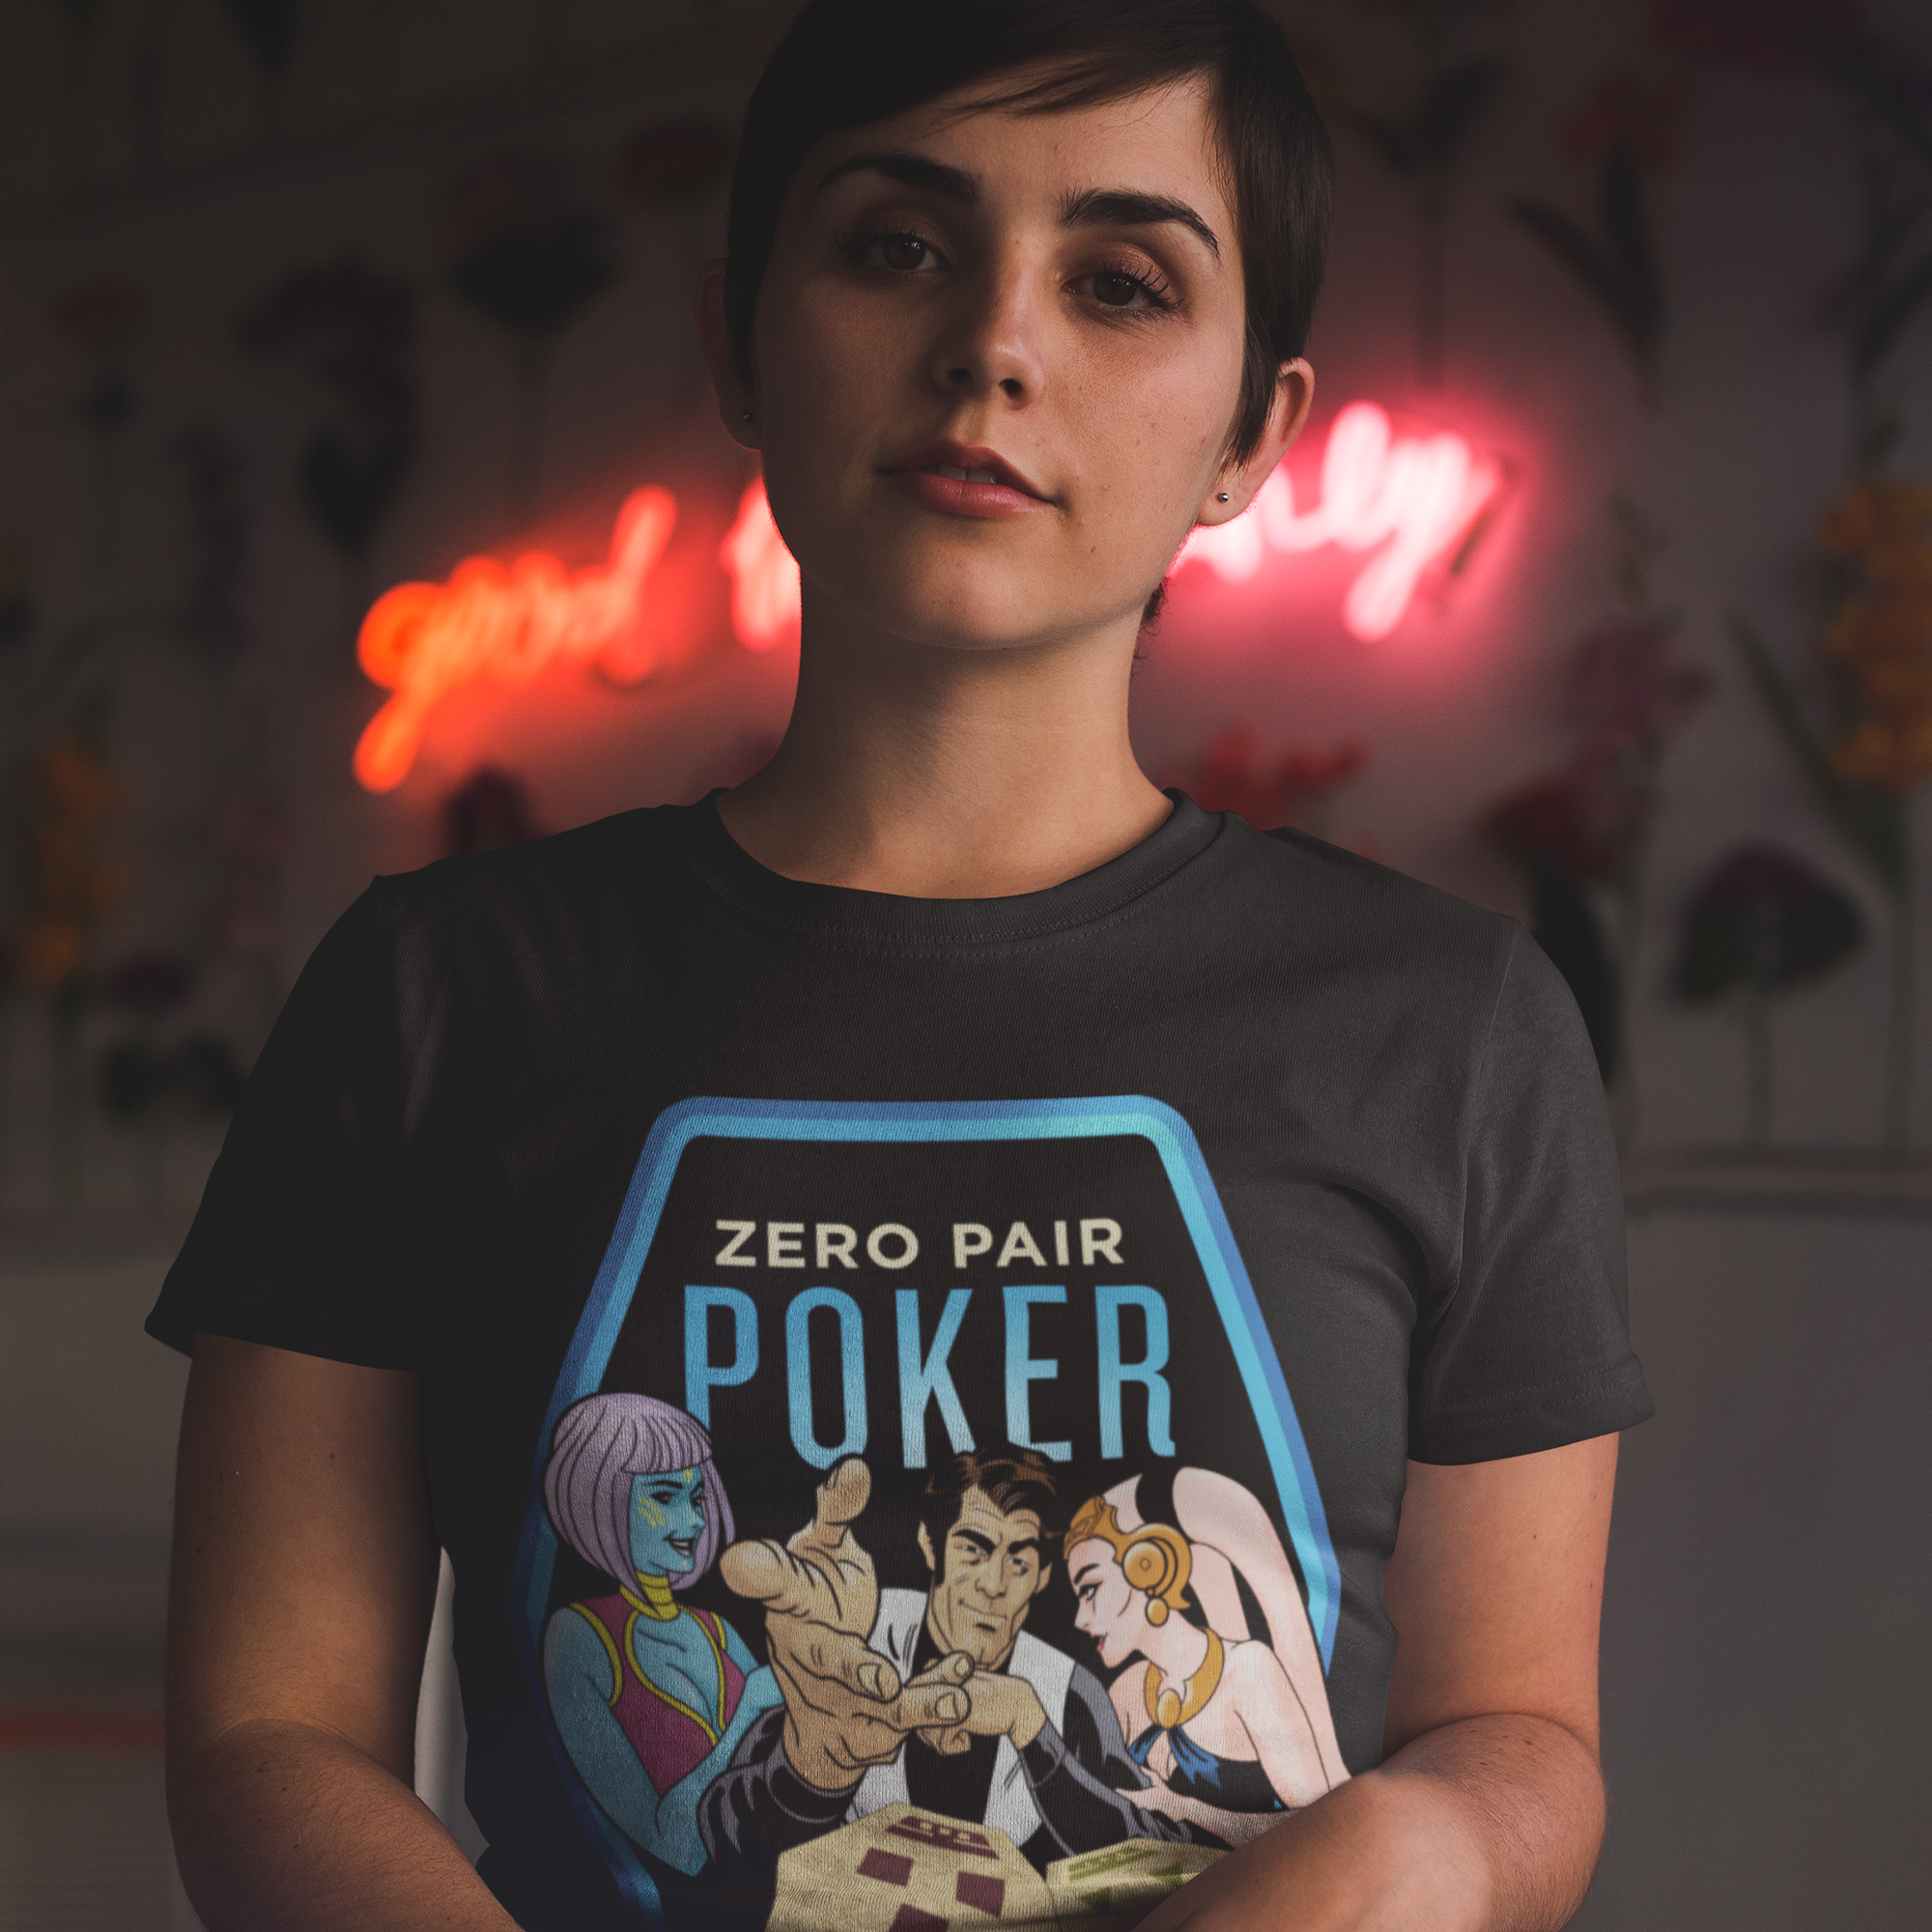 Zero Pair Poker Femme T-Shirt | Rollacrit